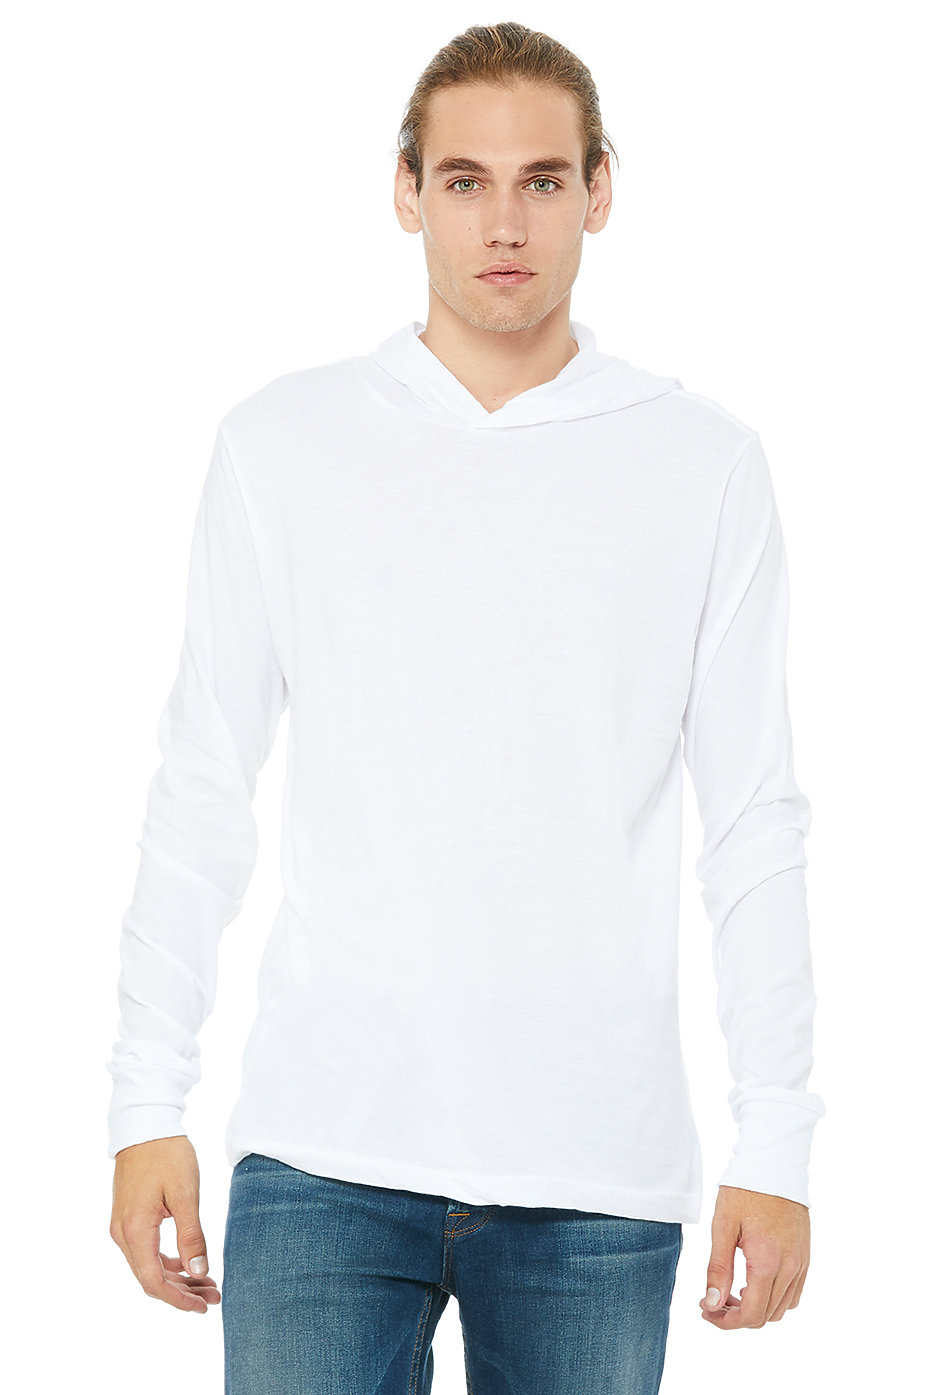 Mens Cross-Dyed Light Weight Heather Jersey Sweatshirt Pullover Hoodie  -13104